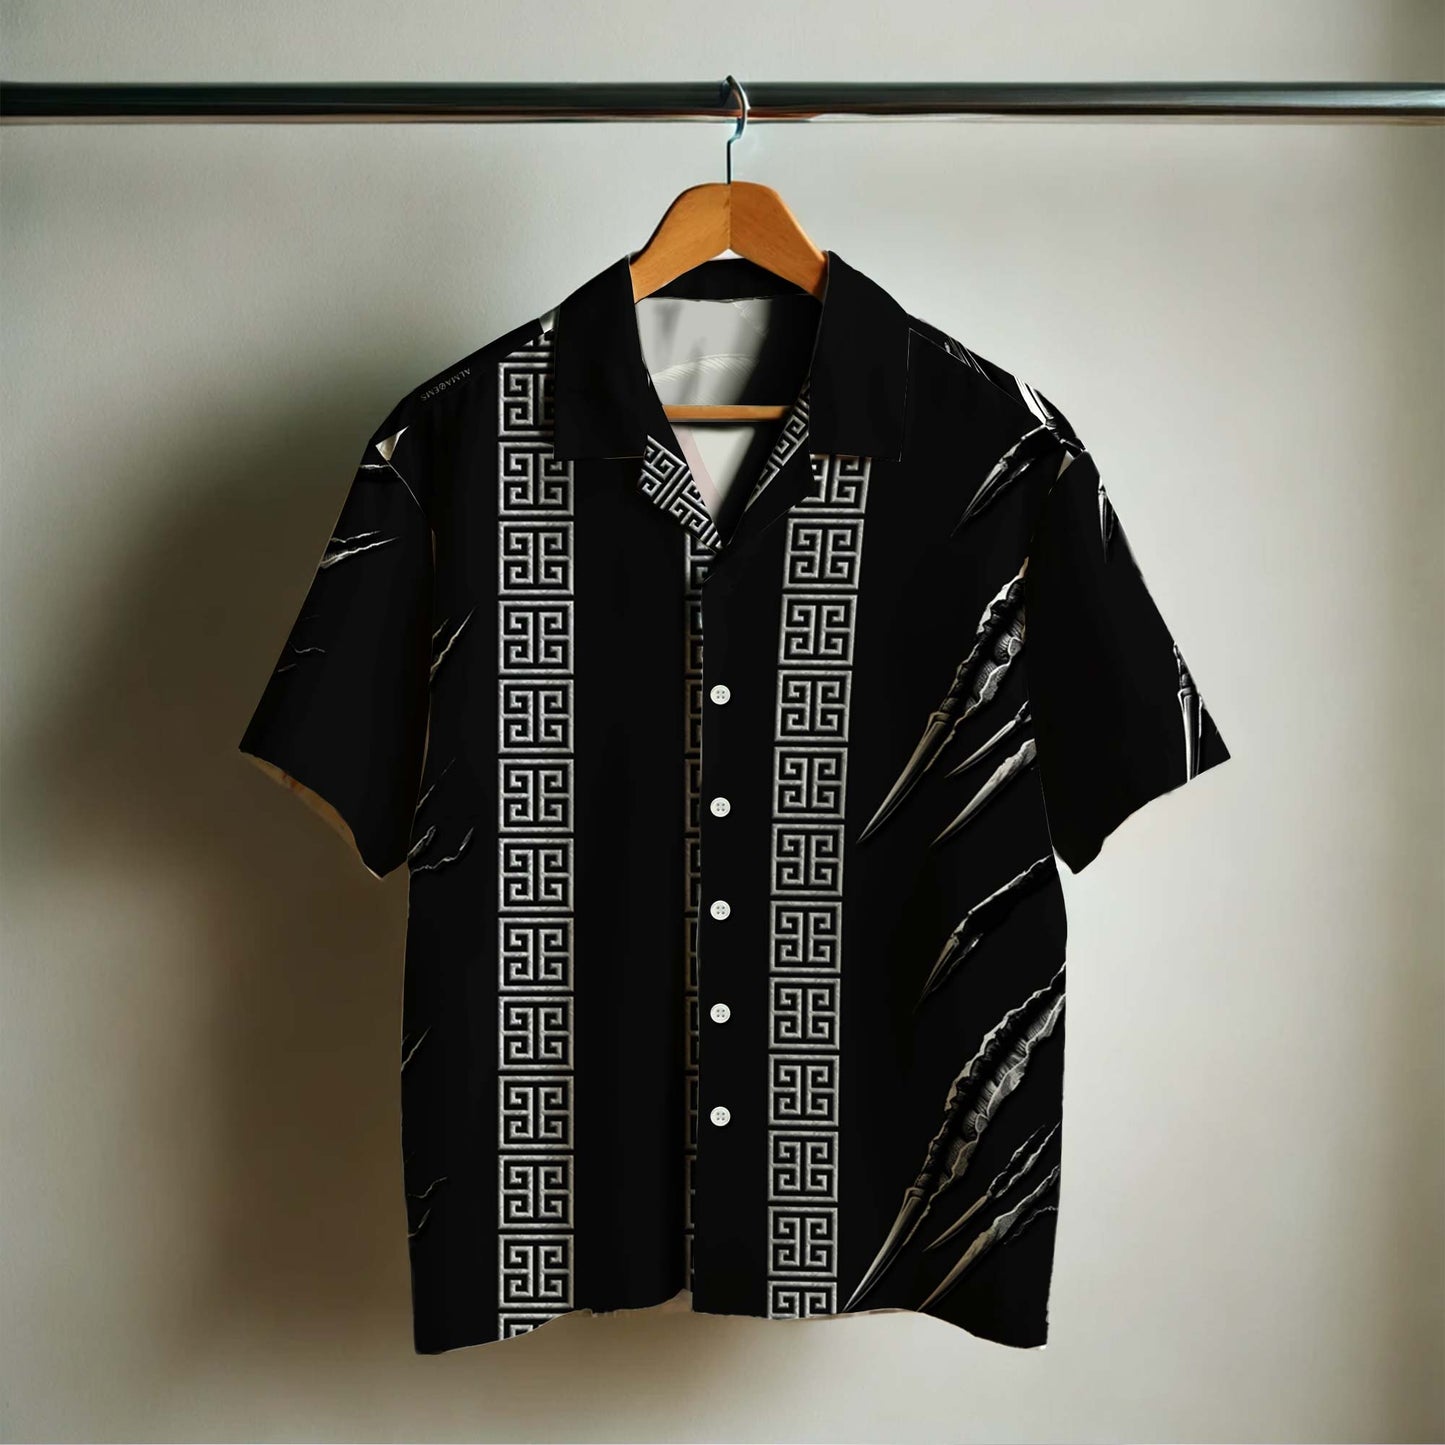 El Jefe - Camisa hawaiana unisex personalizada - HW_MX03